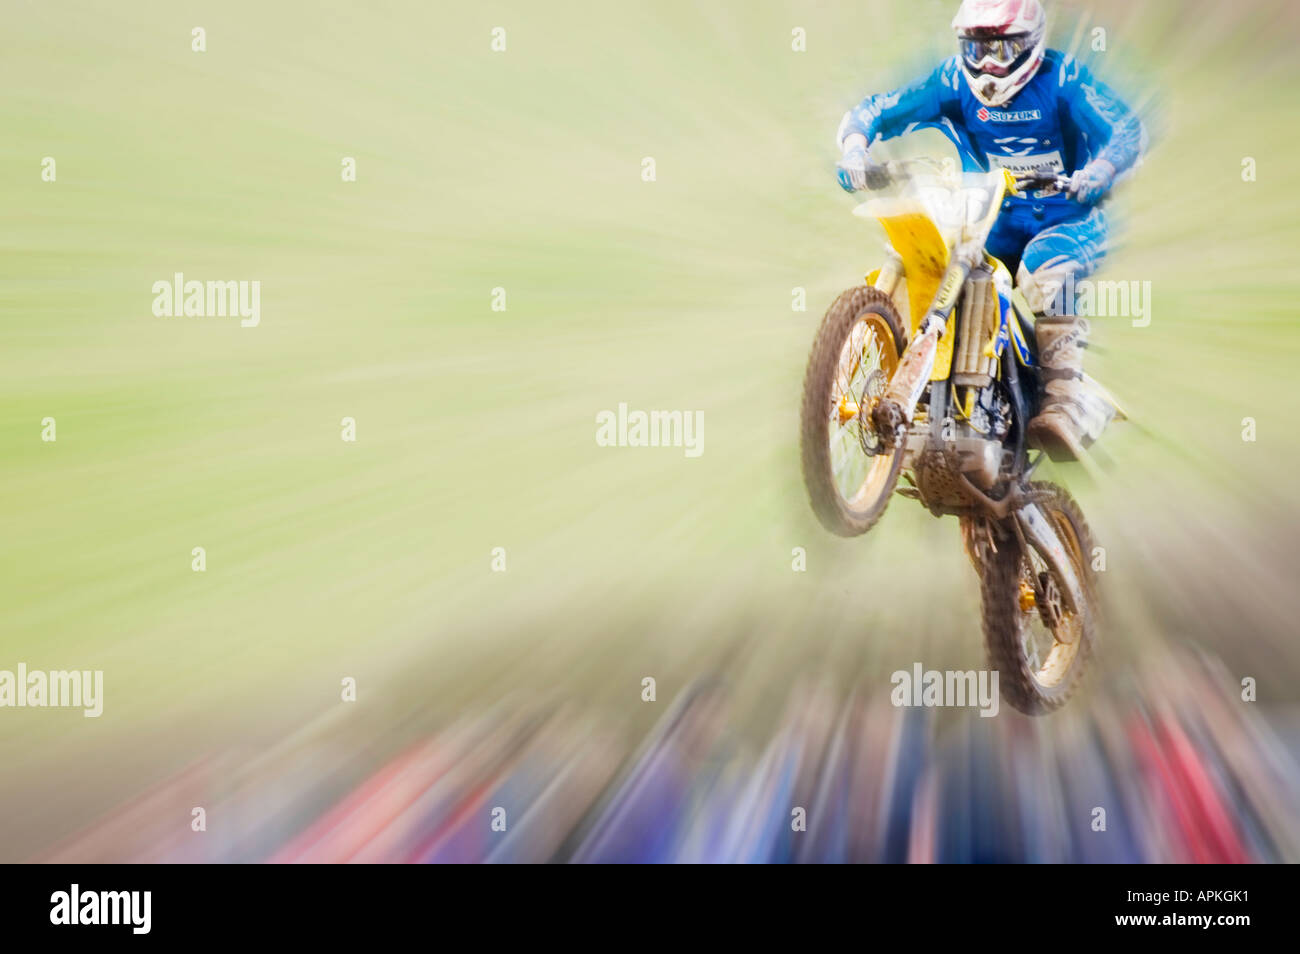 Motocross competitor flies through air Stock Photo